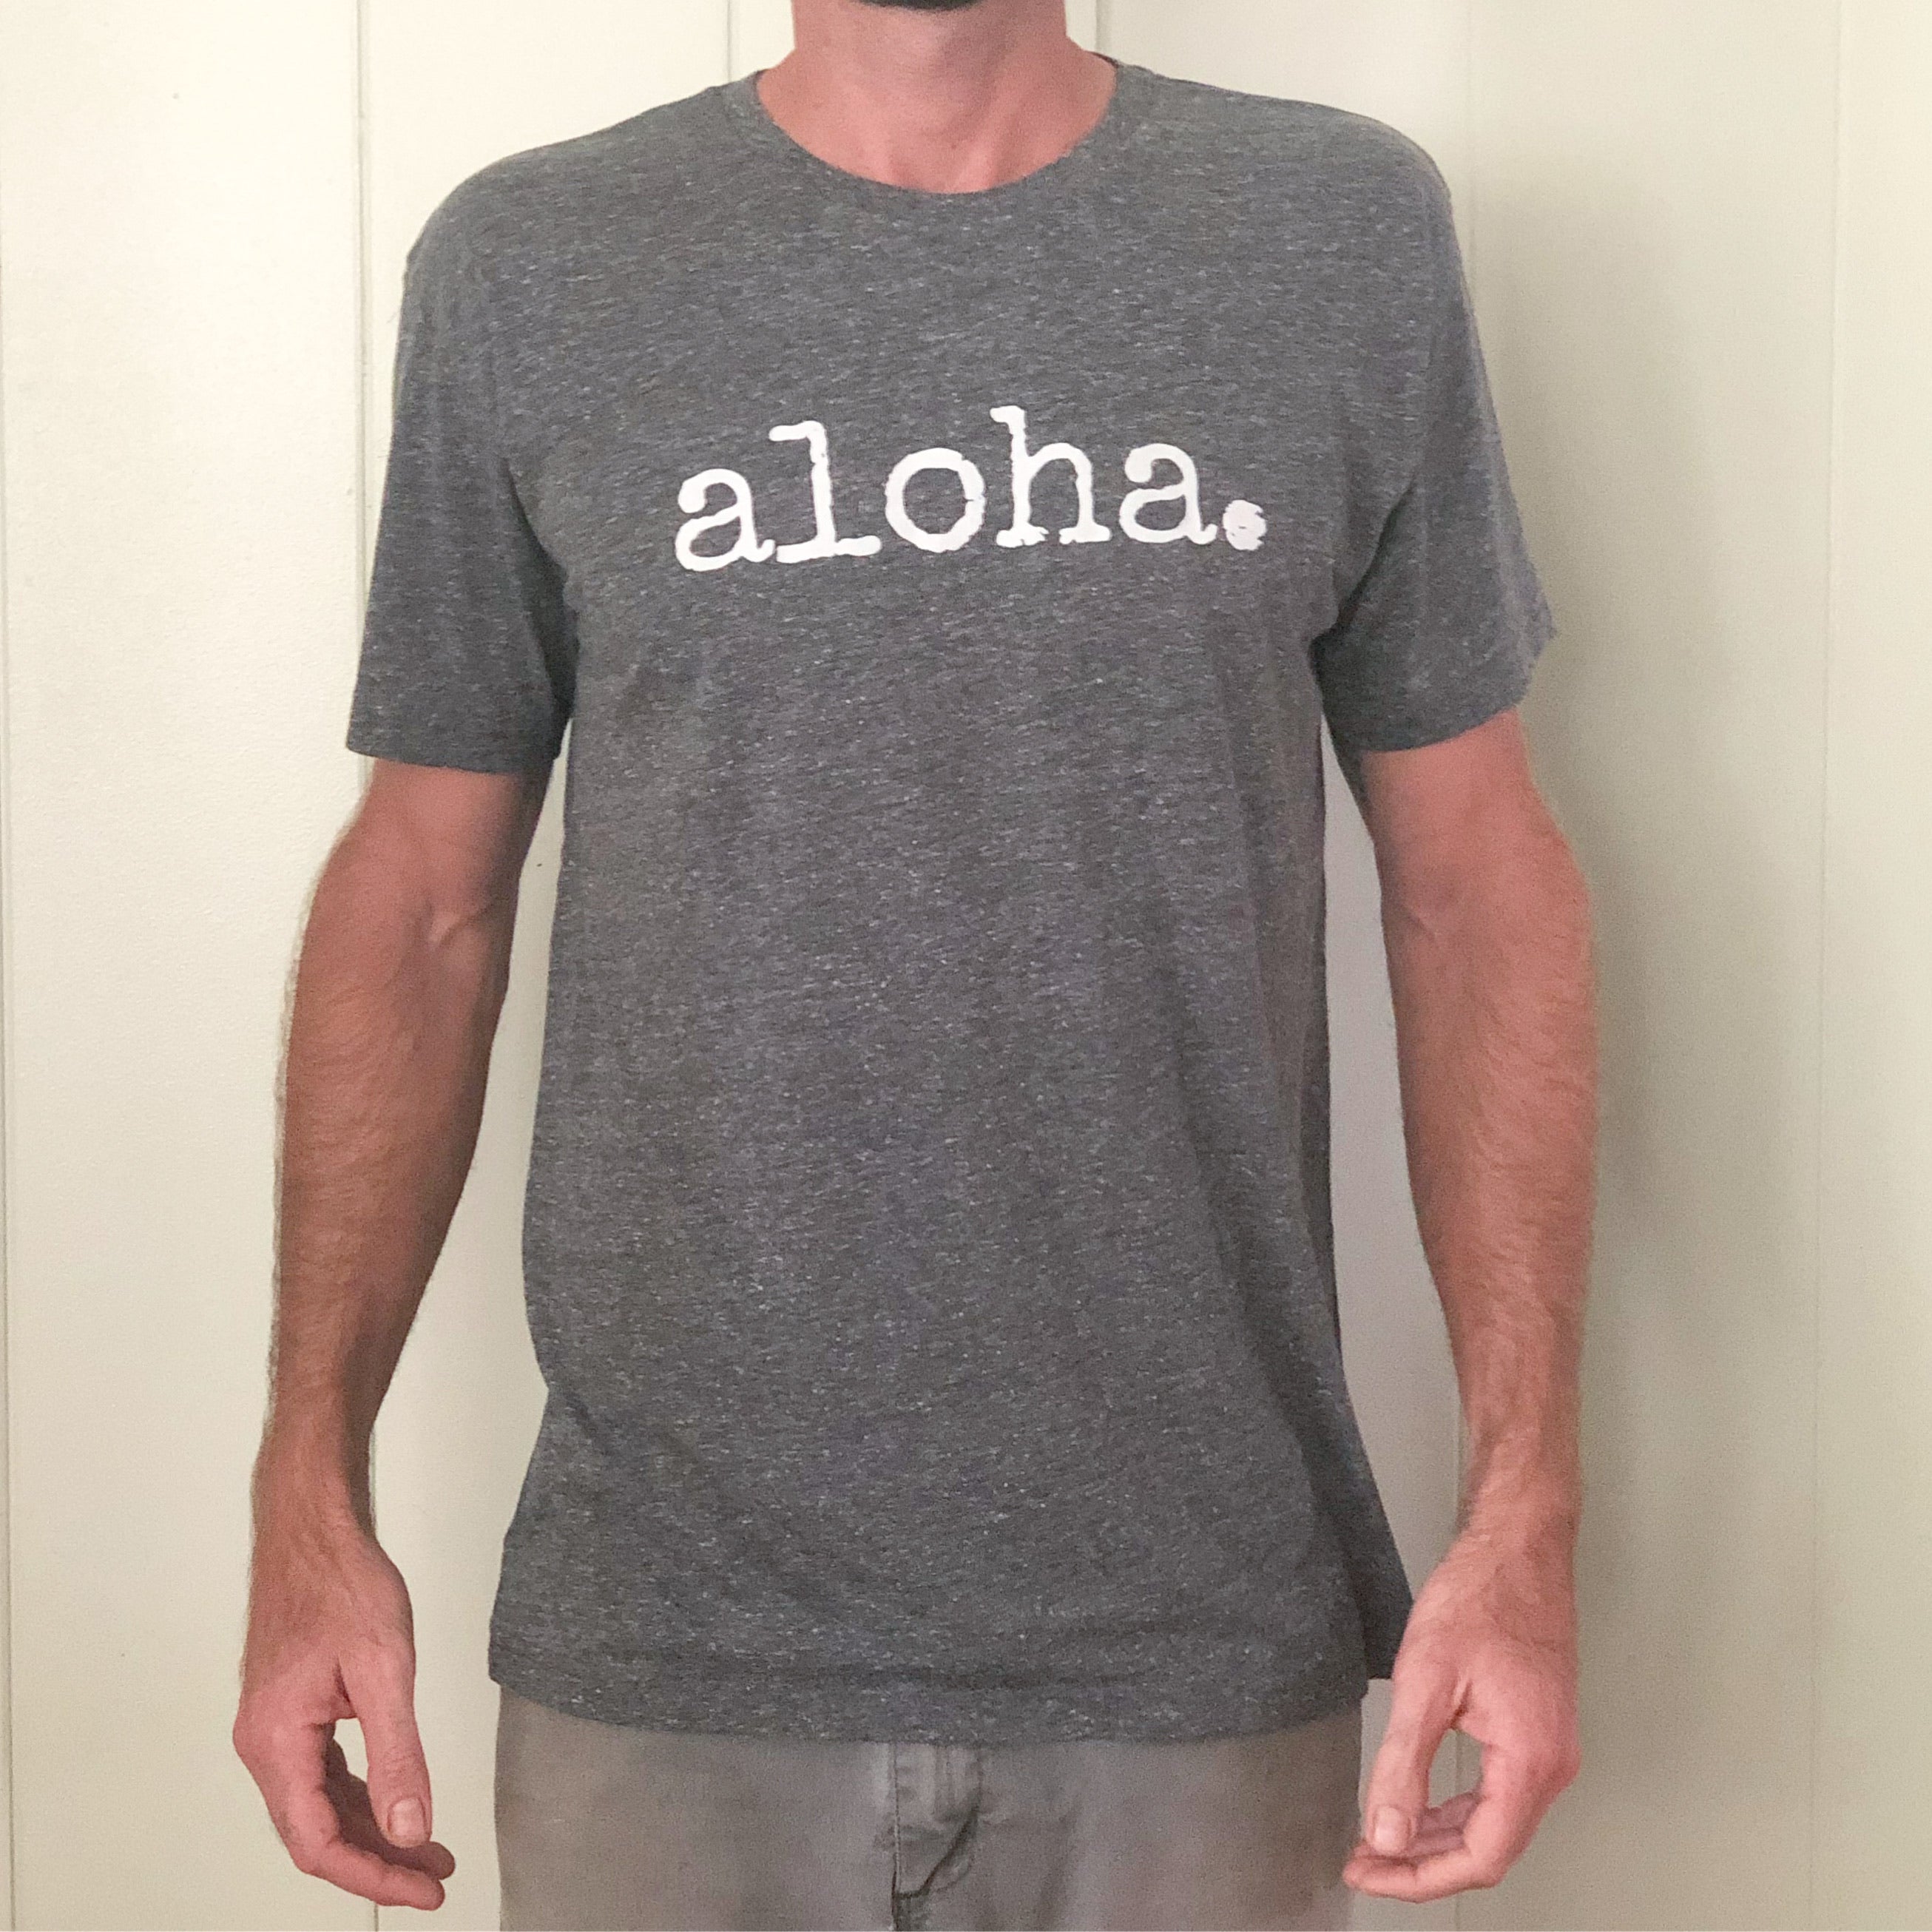 aloha. T-Shirt - Unisex ADULT – Ivy & Co.